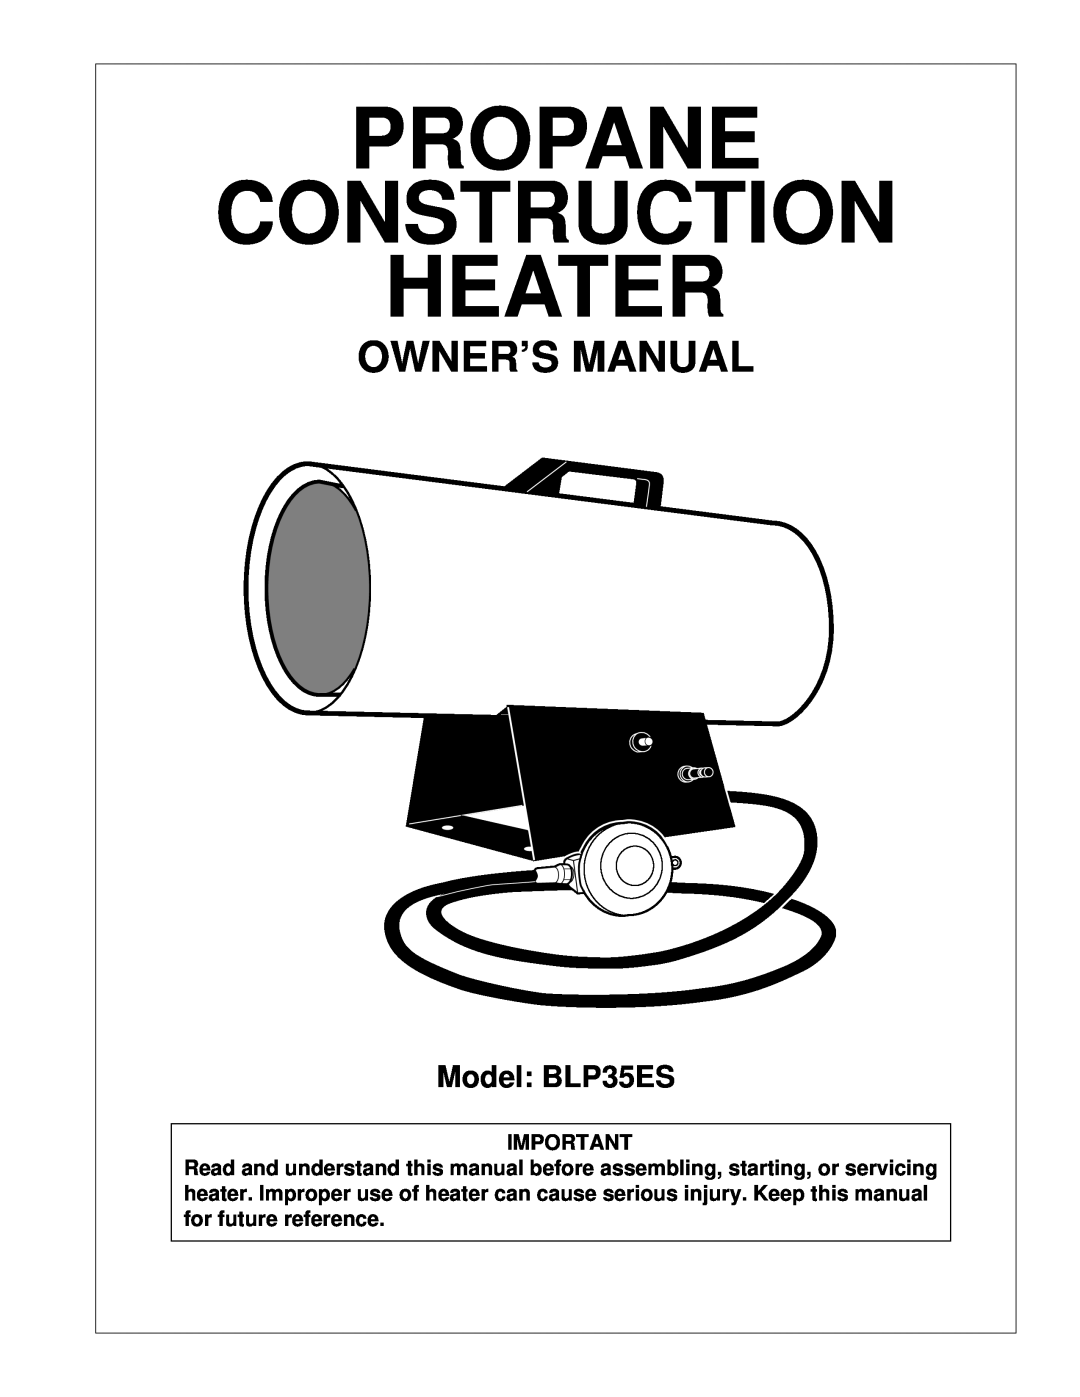 Desa owner manual Propane Construction Heater, Model BLP35ES 